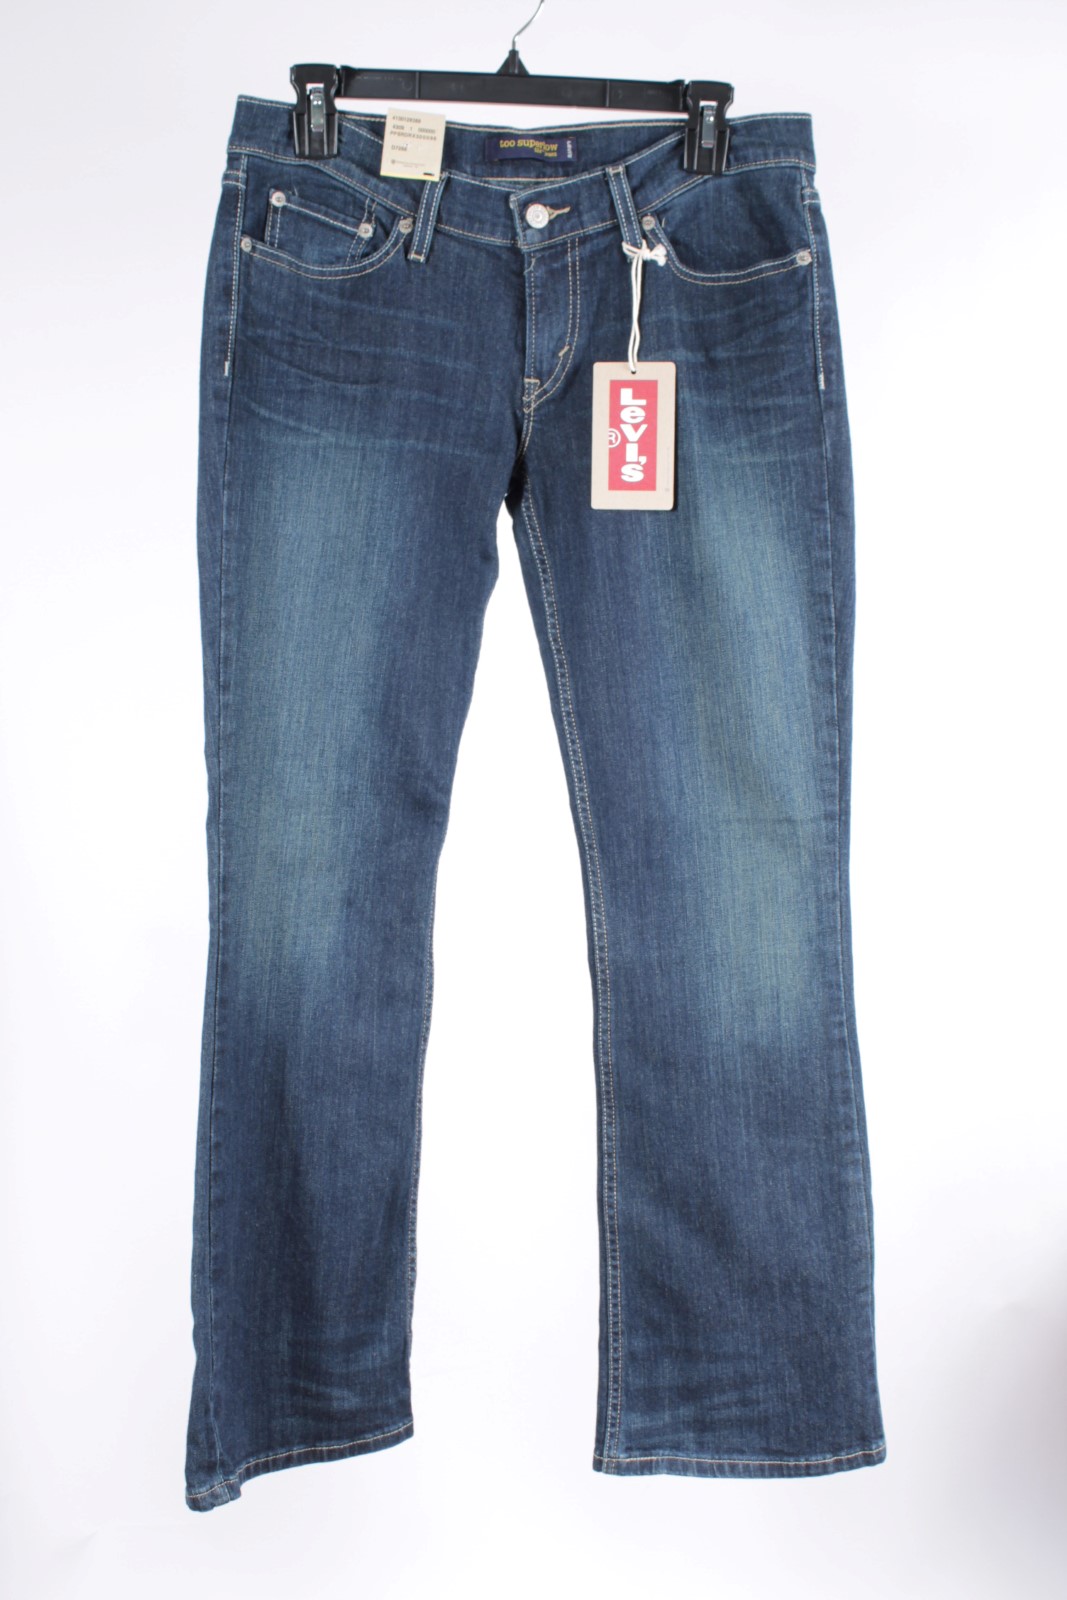 Levi's Juniors Boot Cut Ultra Low Rise Stretch Denim Blue Jeans 7 Short NWT